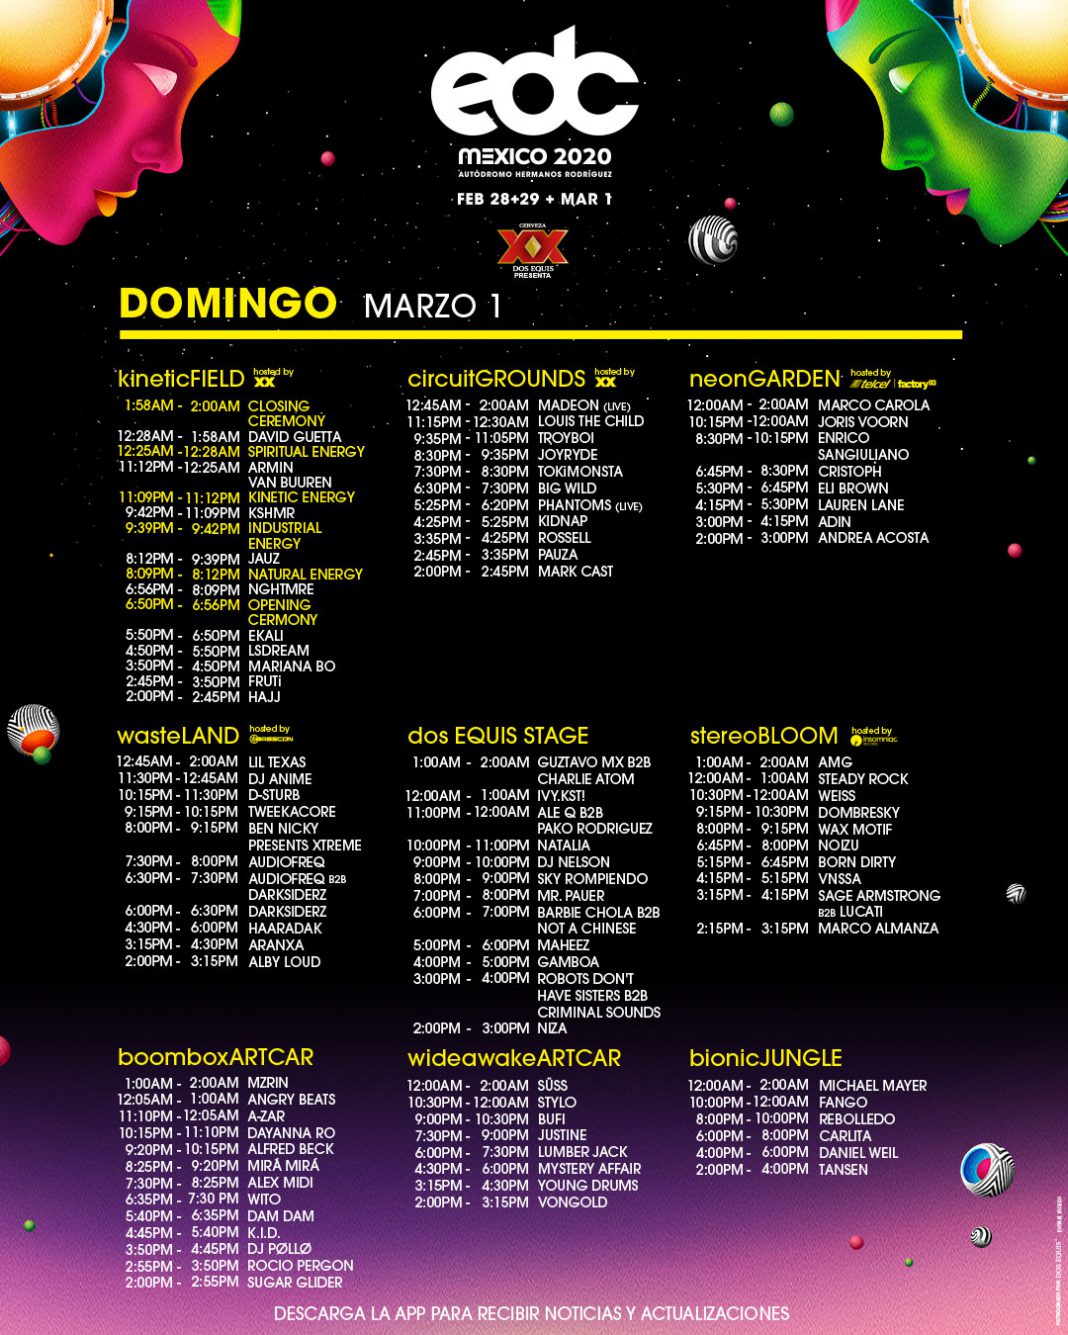 EDC Mexico 2020 Live Stream Schedule & Info [Watch Inside] EDM Identity